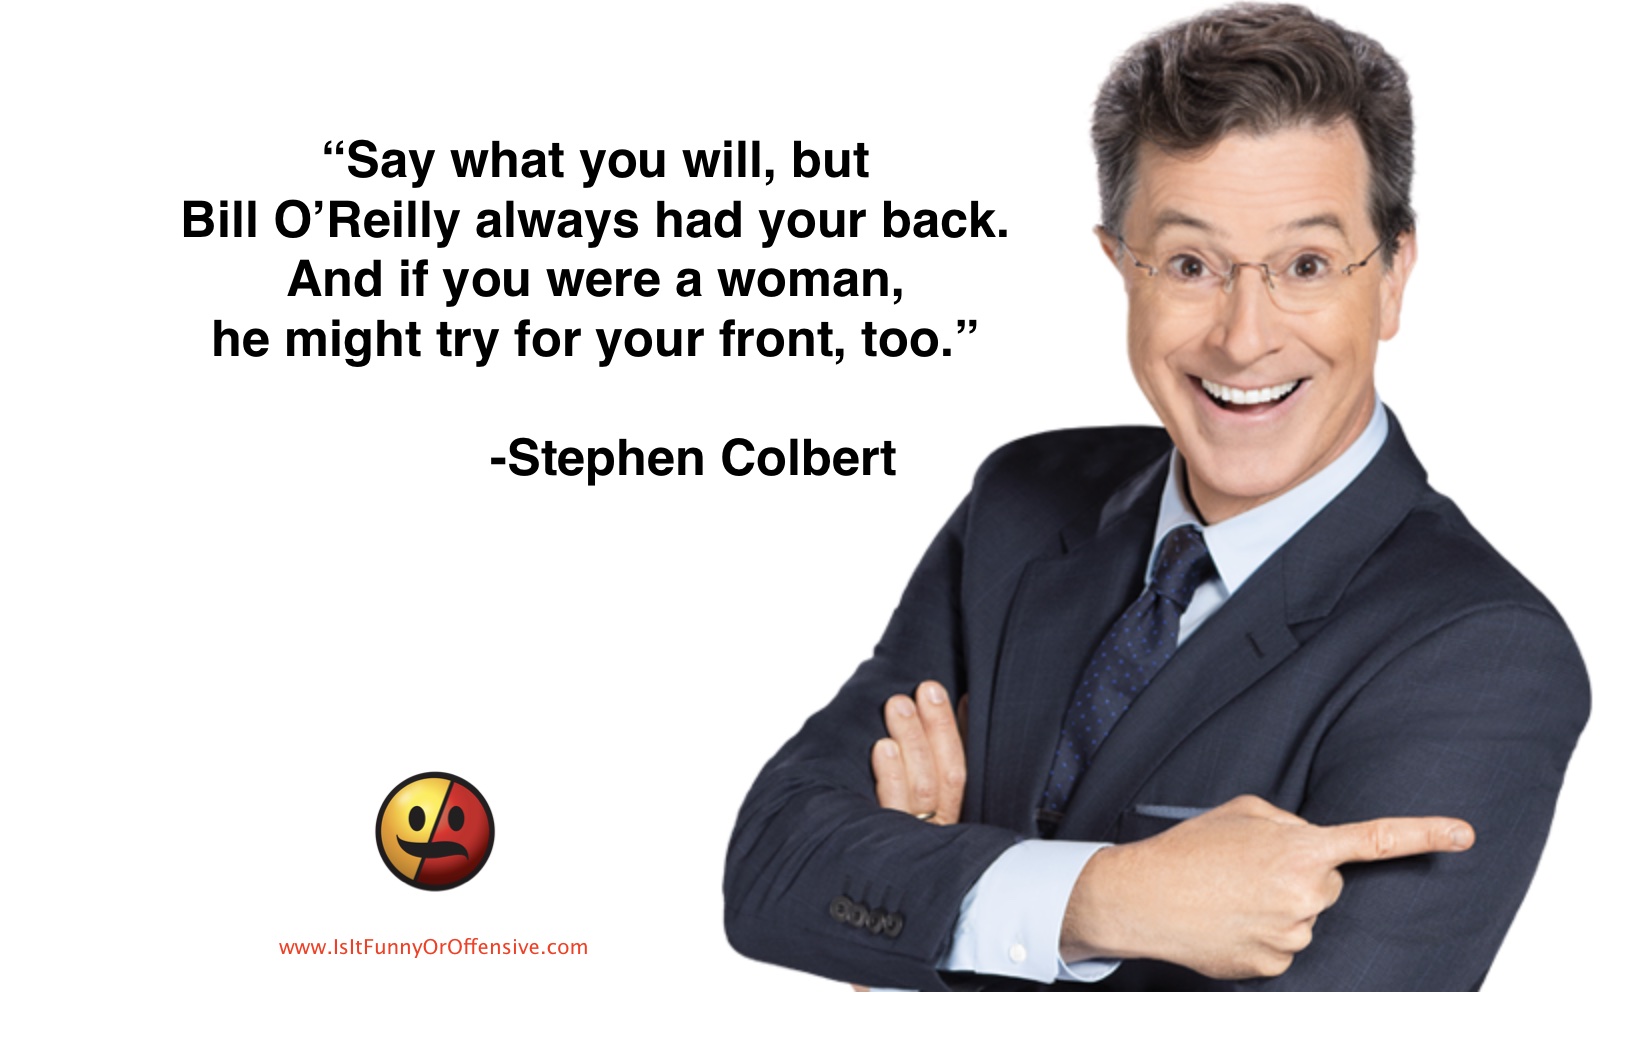 Stephen Colbert on Bill O'Reilly